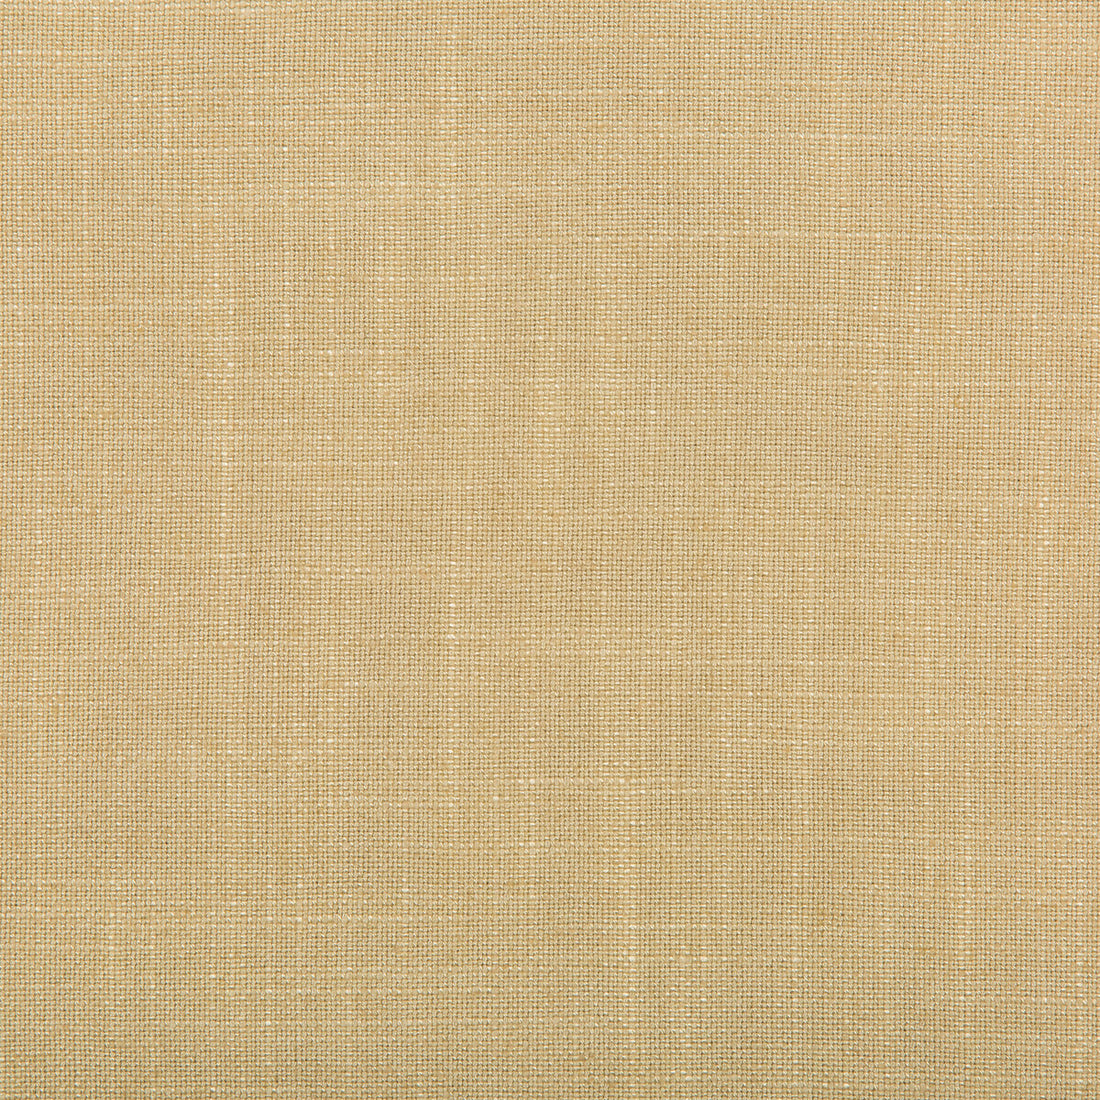 Aura fabric in cream color - pattern 35520.1601.0 - by Kravet Design